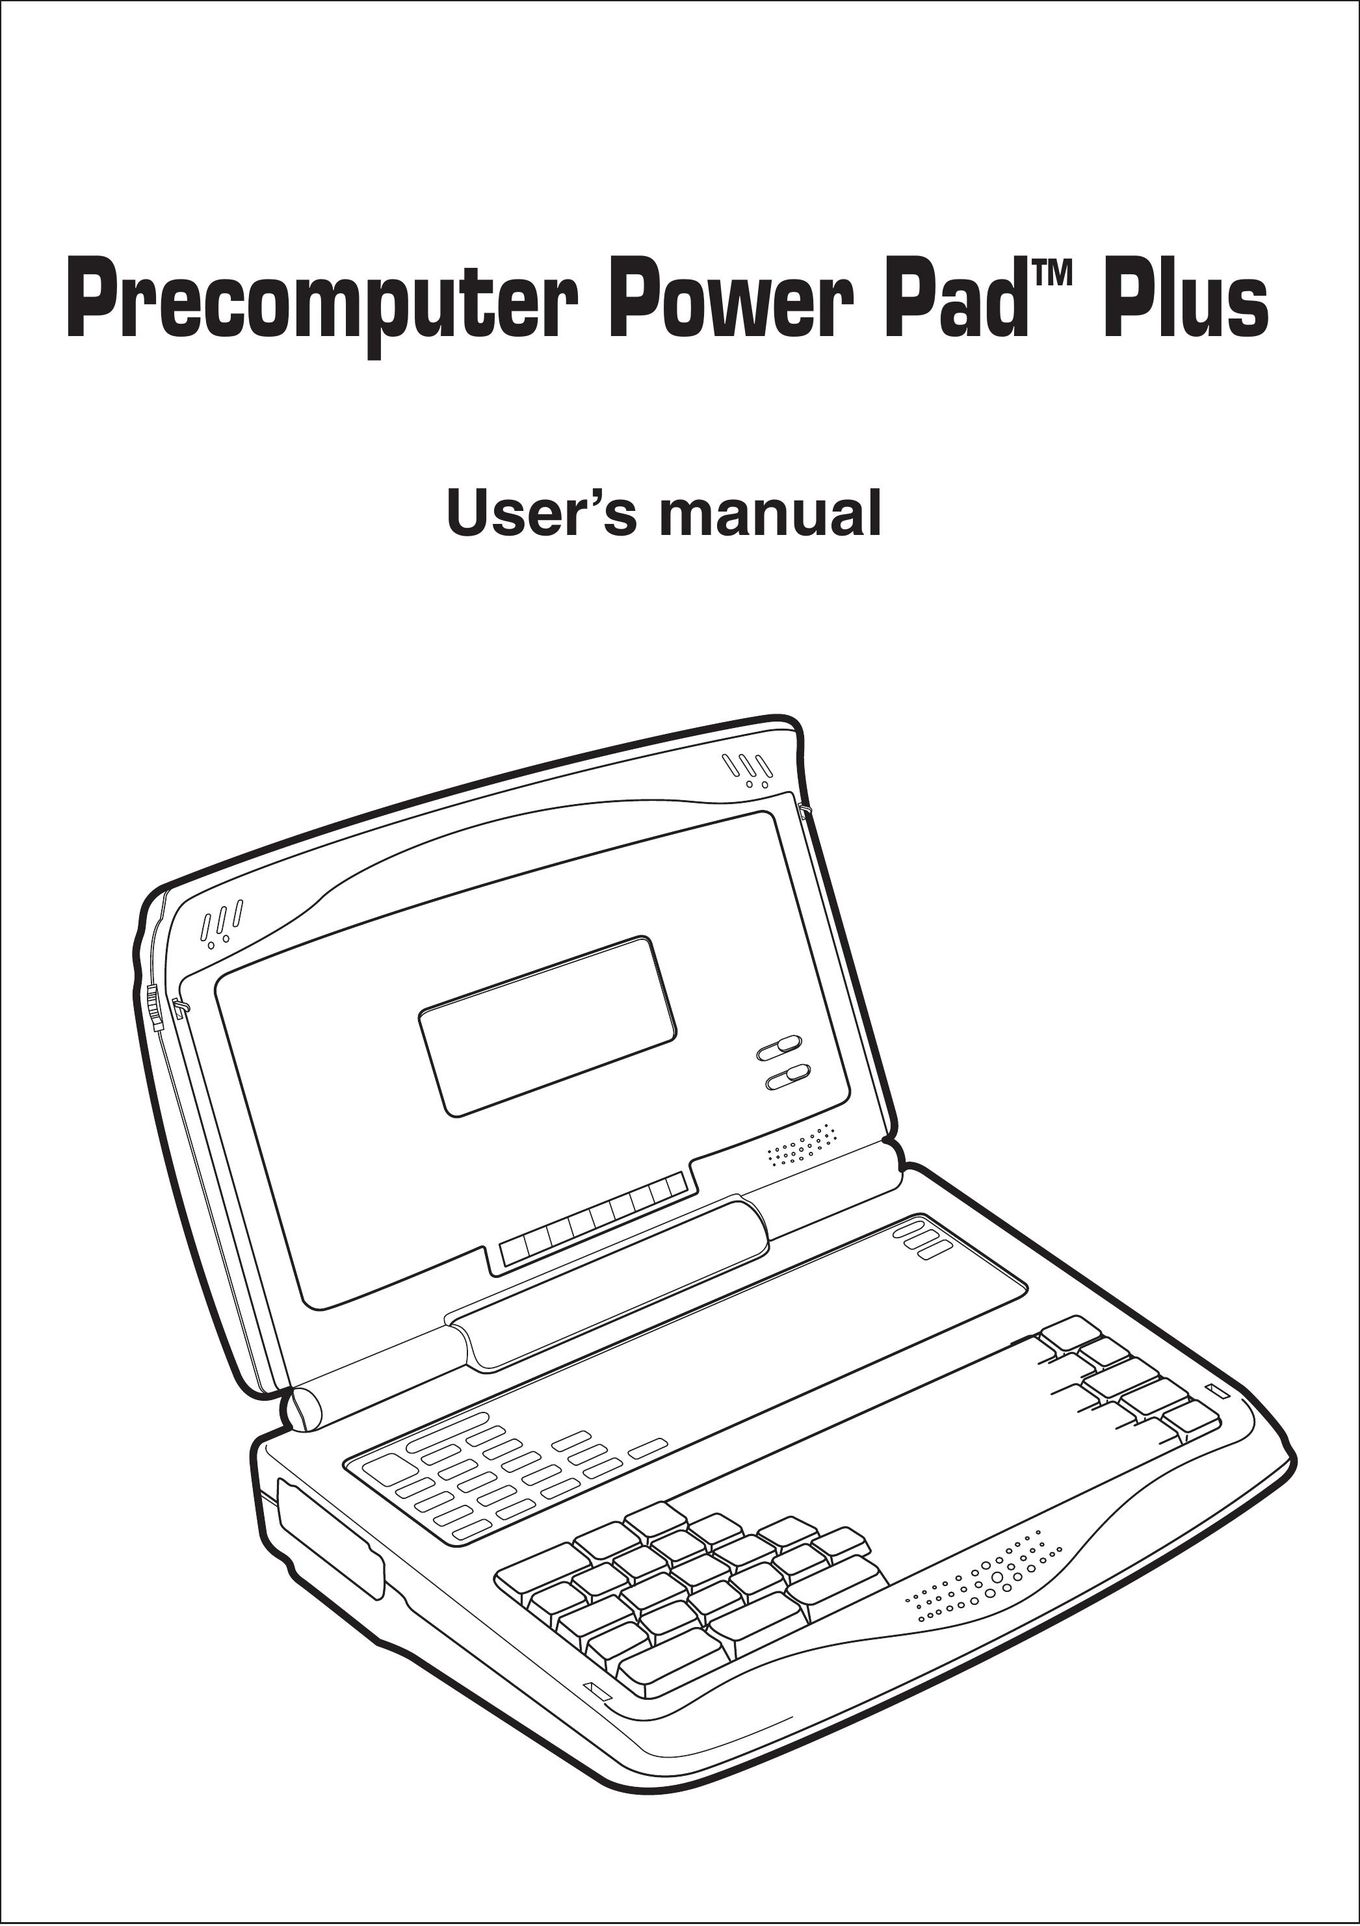 VTech Precomputer Power Pad Plus Games User Manual